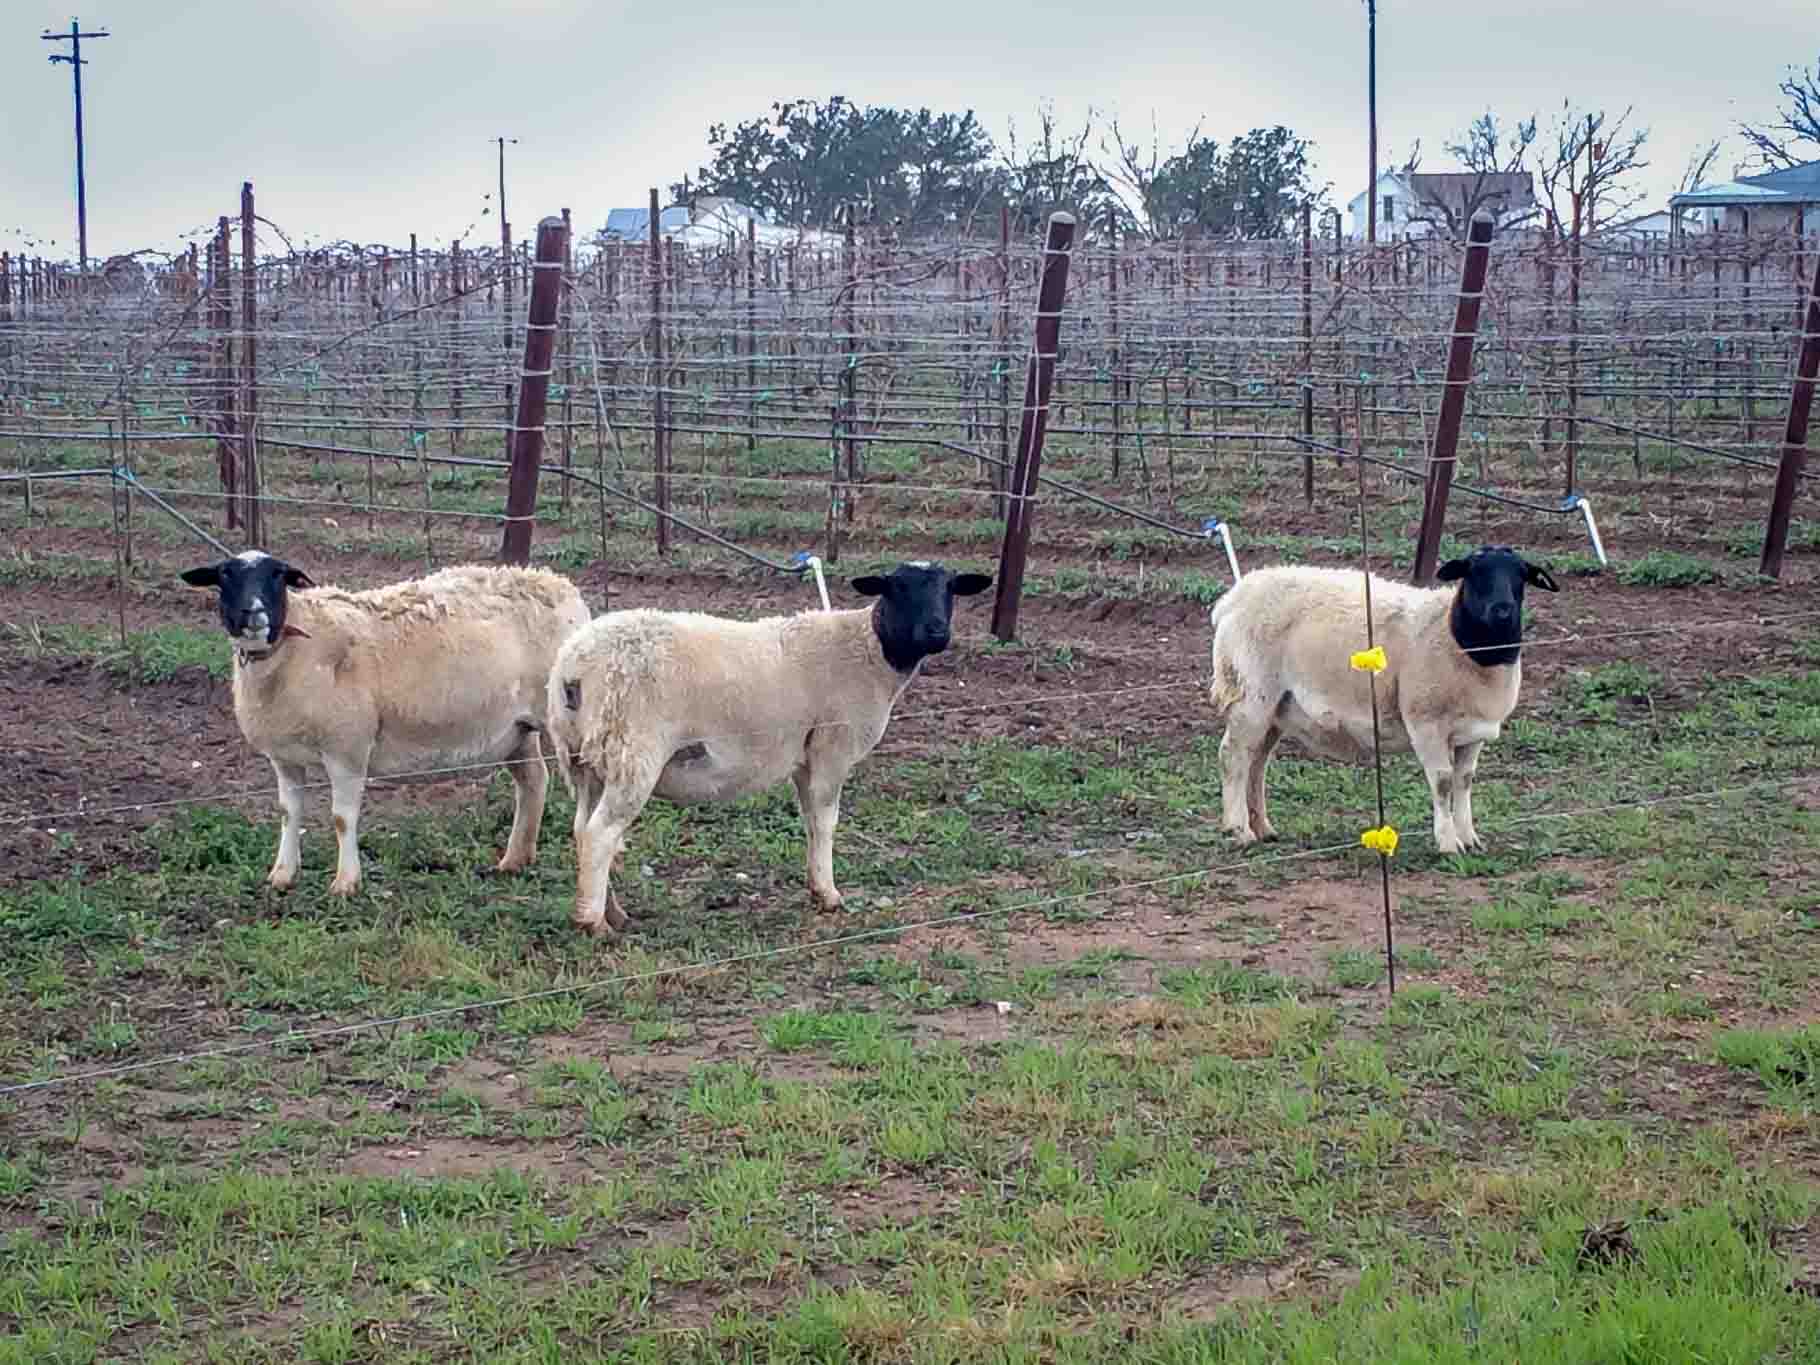 Sheep in a vineyard 